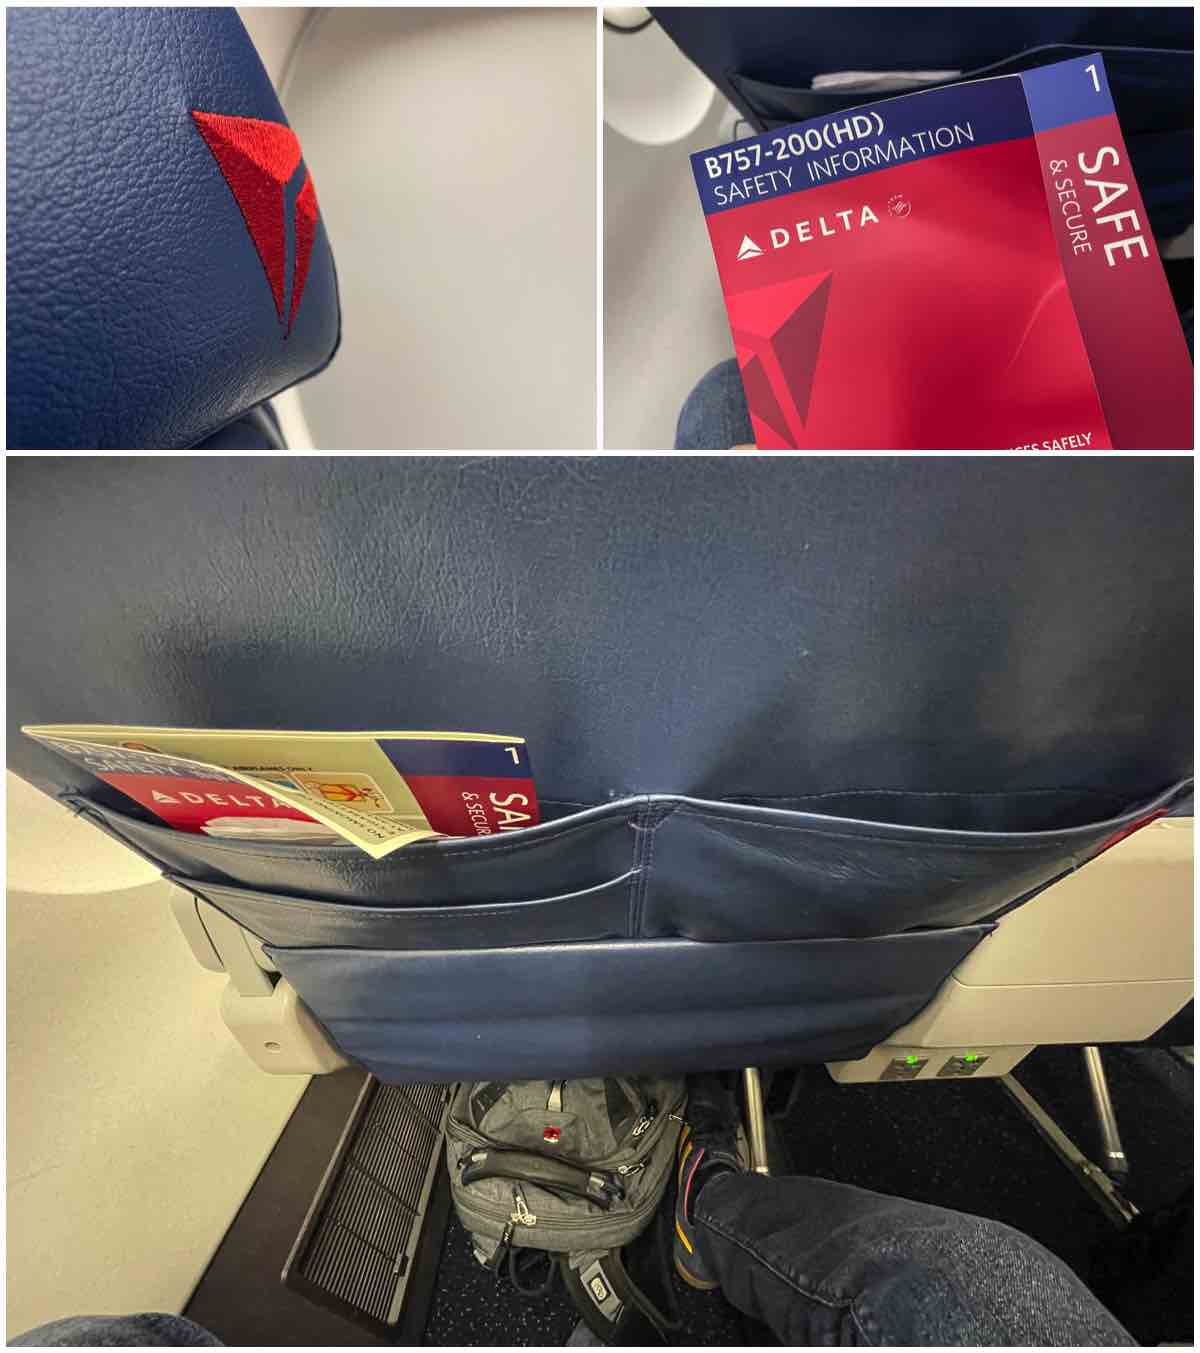 Delta 757-200 first class seat details 